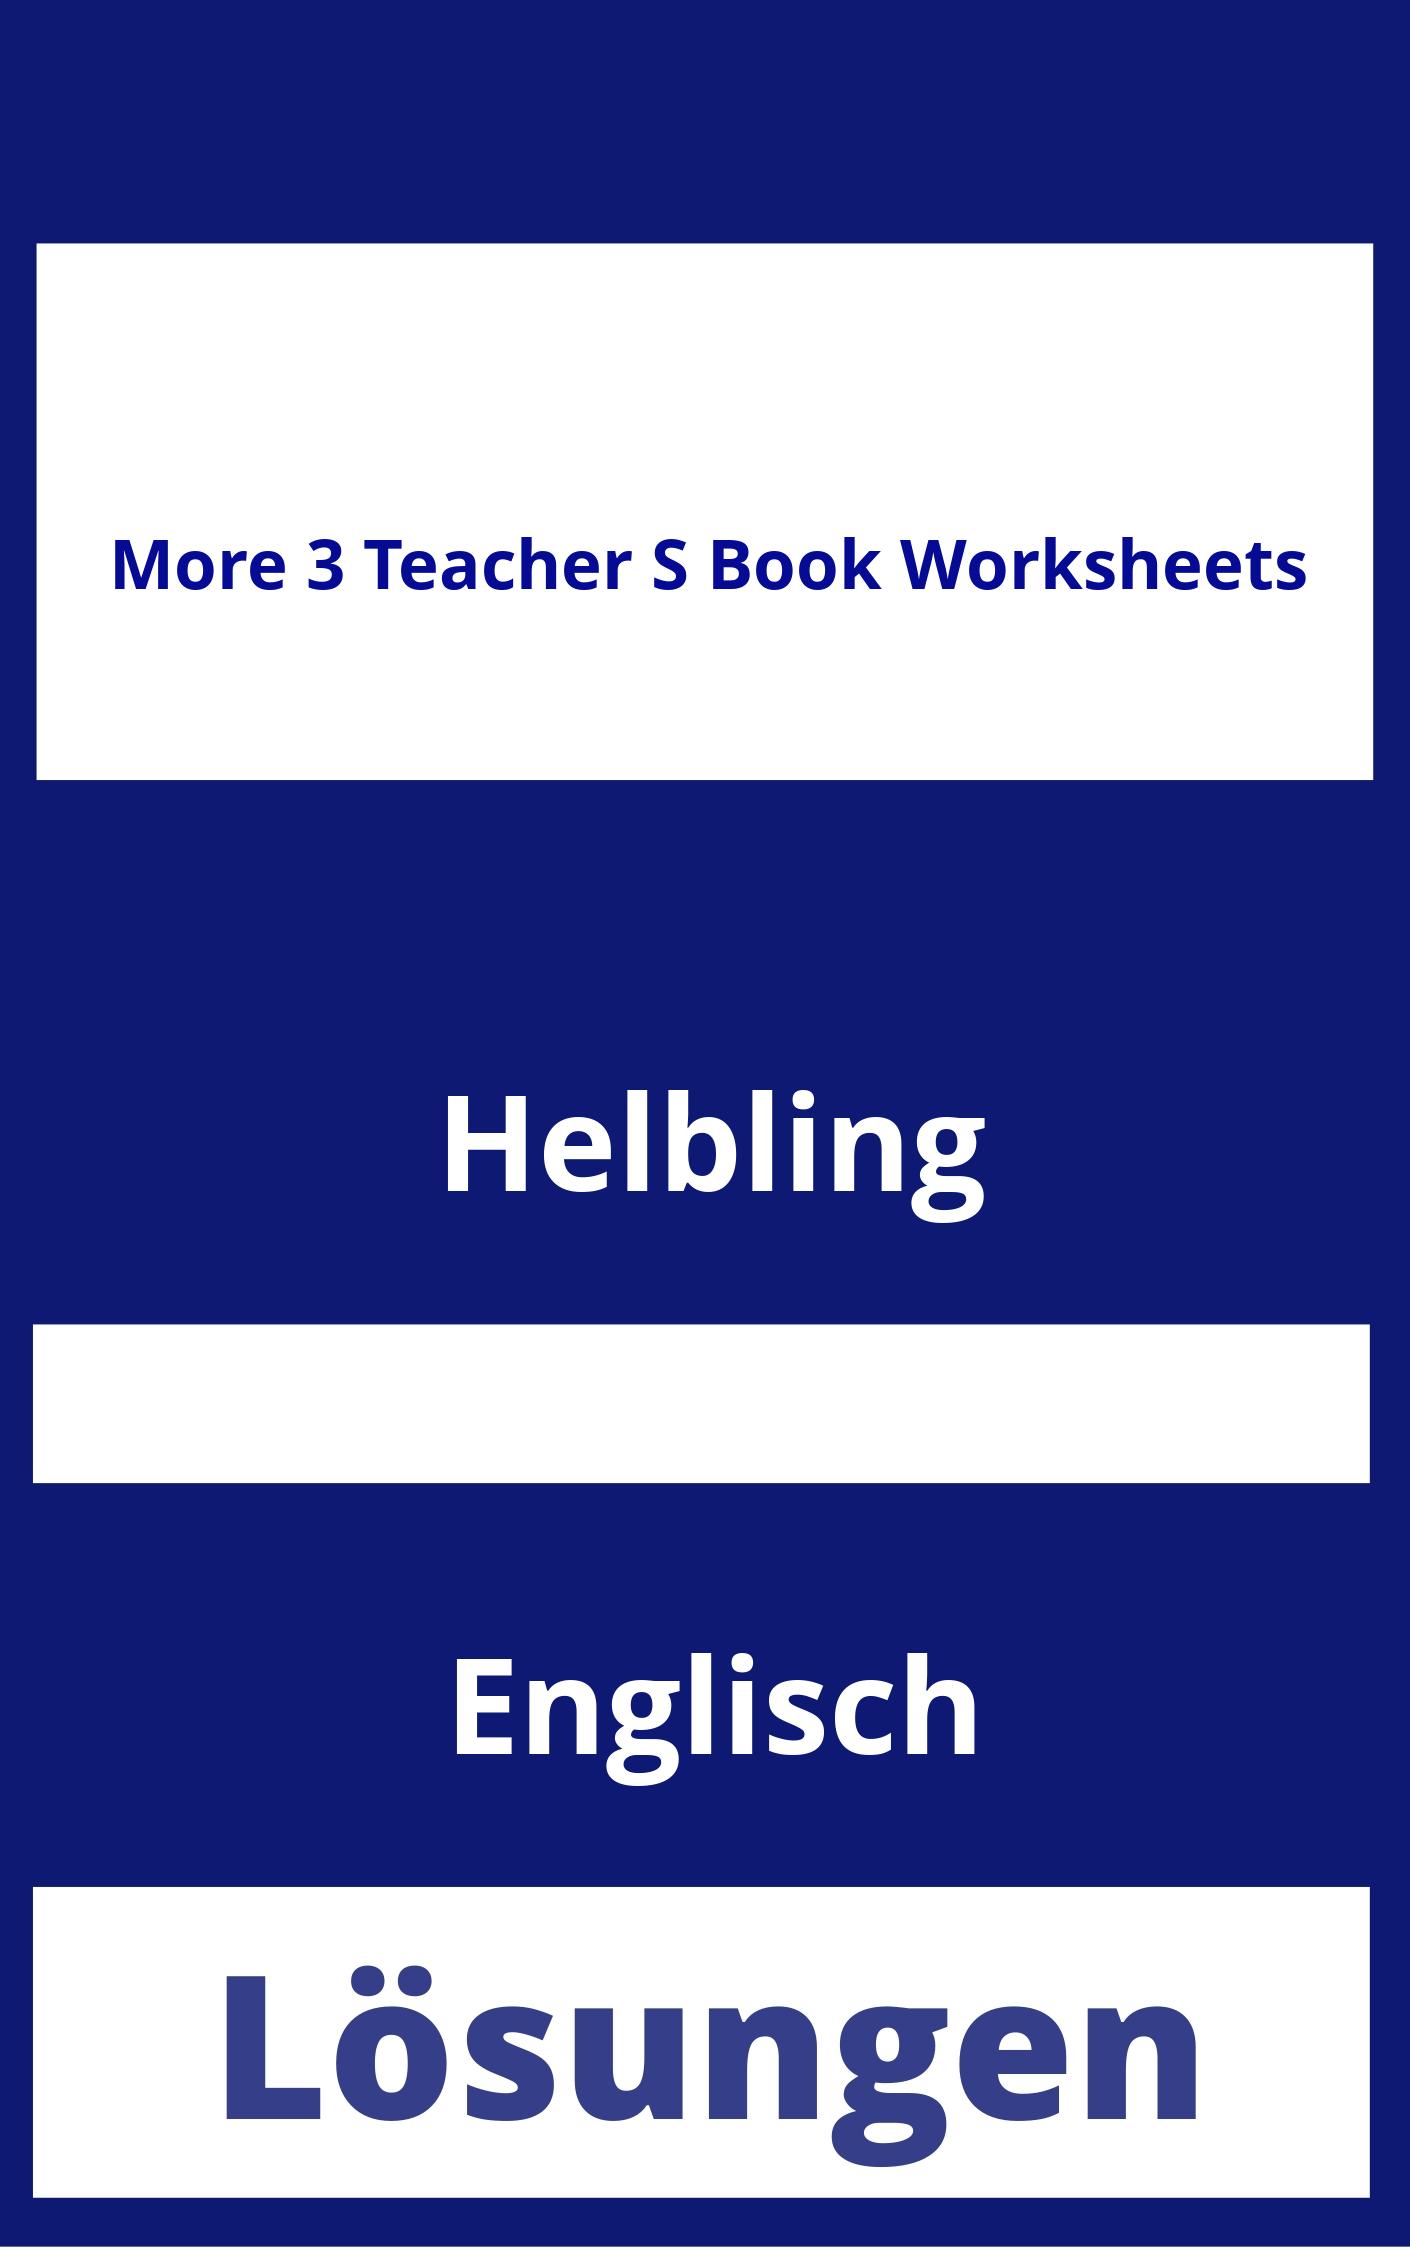 More 3 Teacher's book Worksheets Lösungen PDF